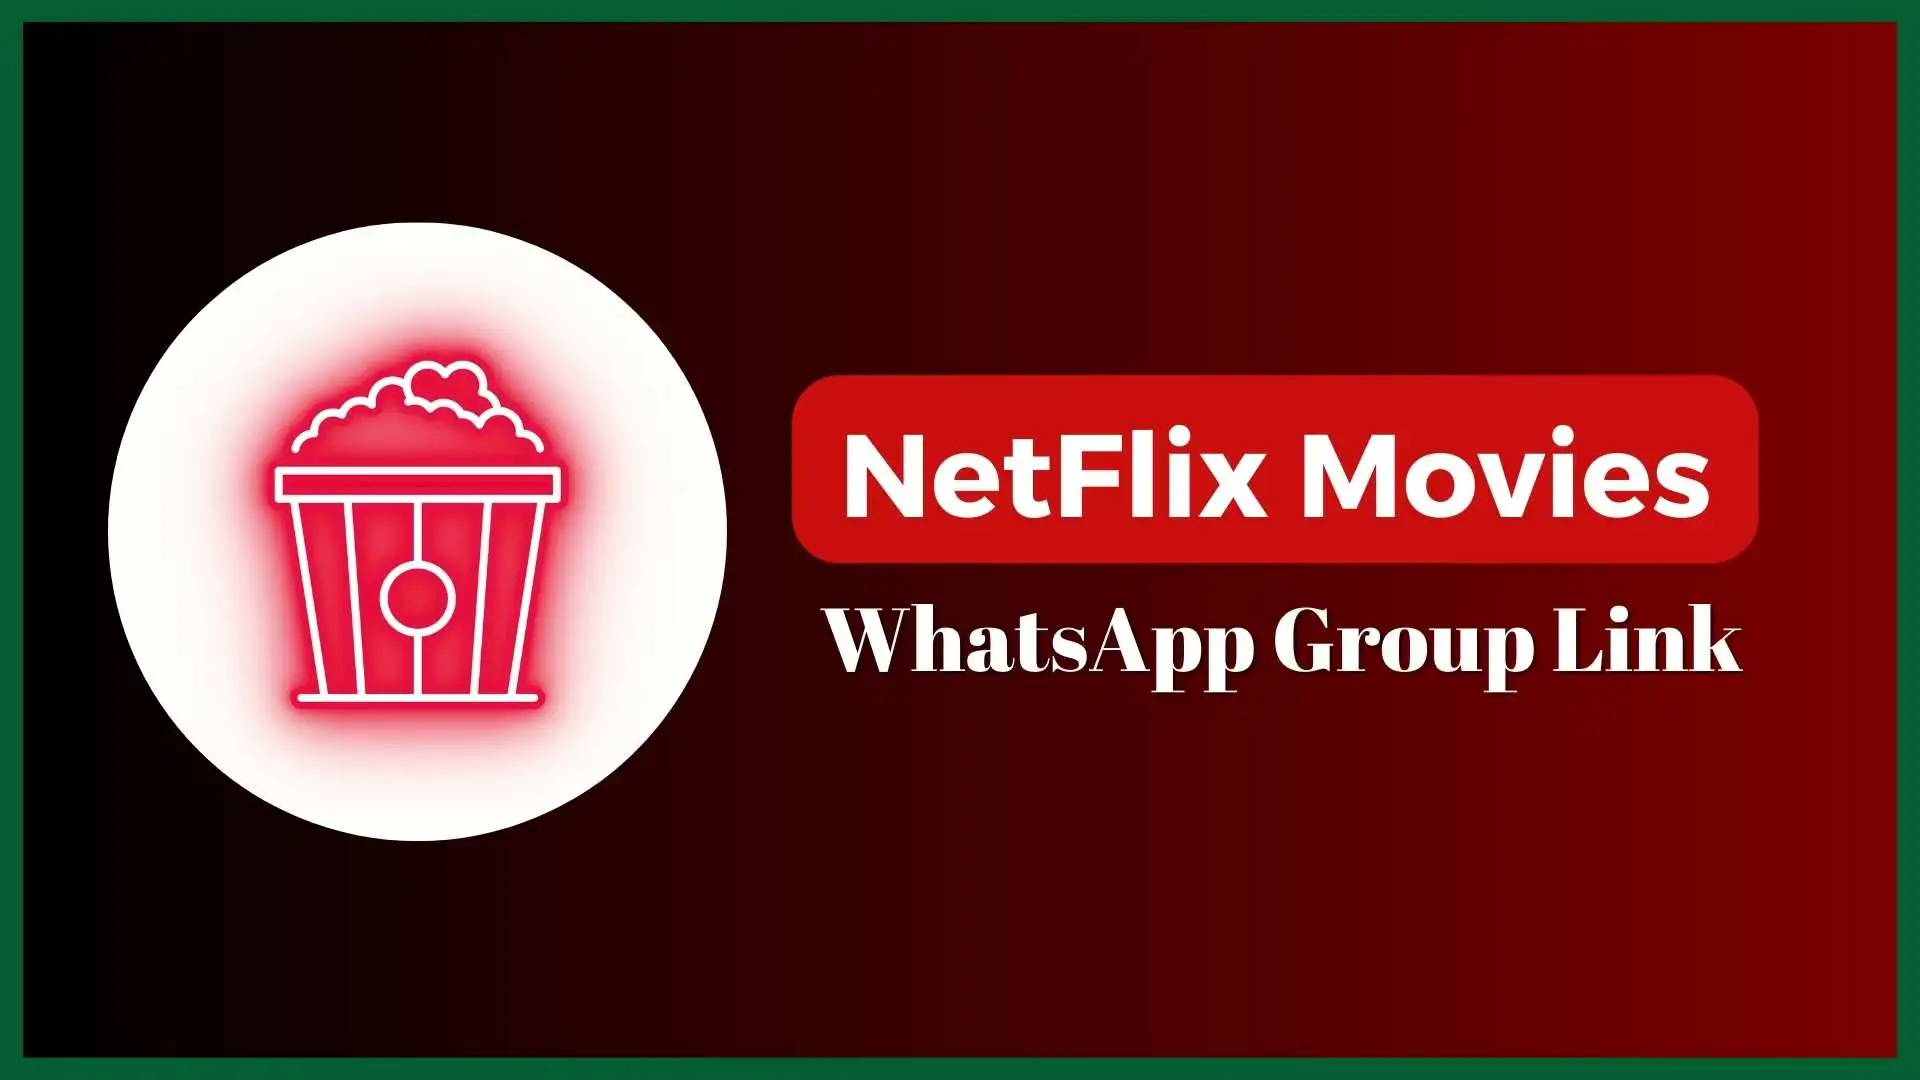 Netflix Movies WhatsApp Group Link